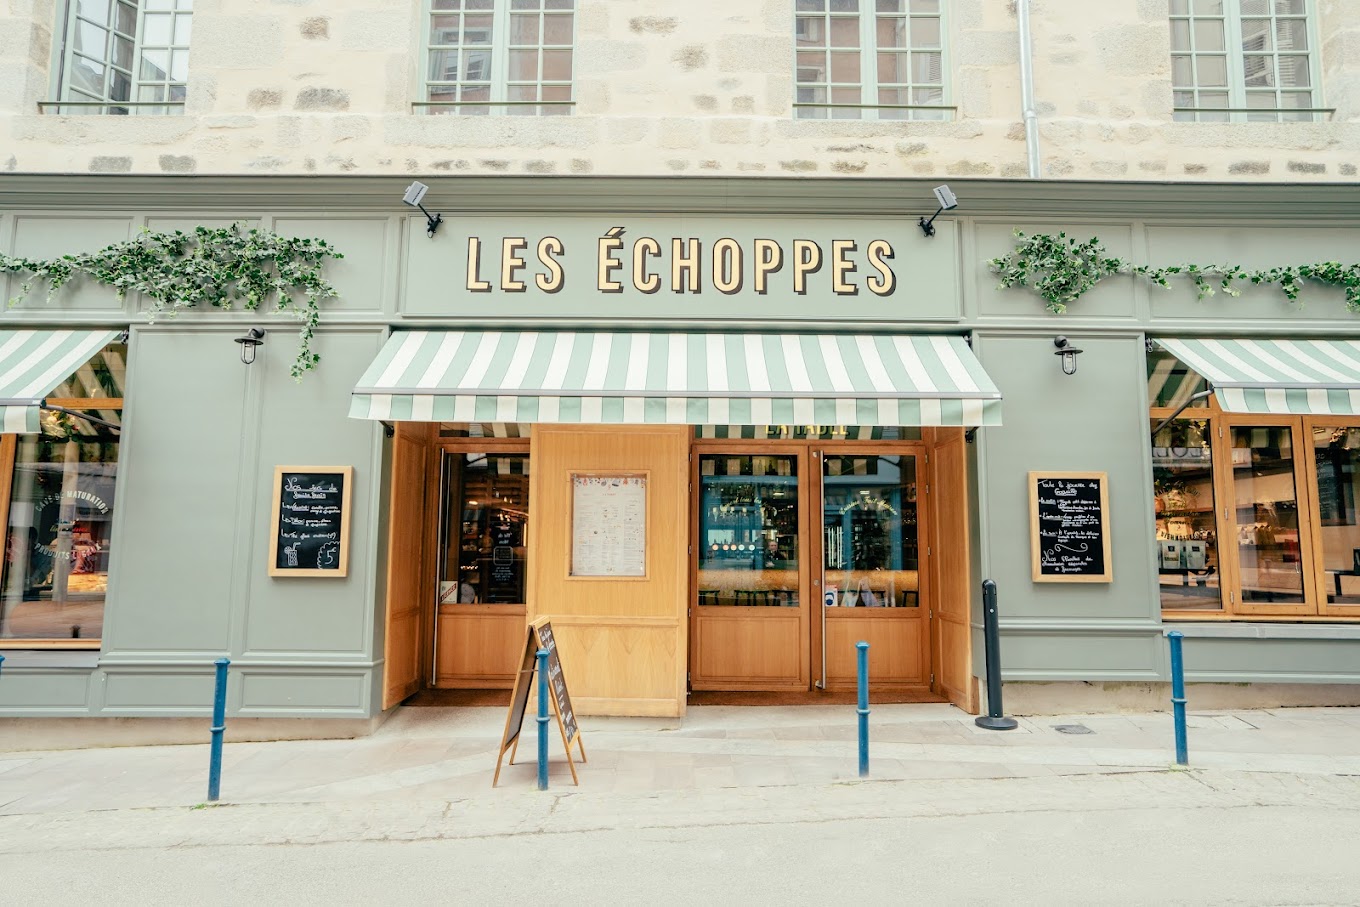 Restaurant Les Echoppes Gogaille null France null null null null